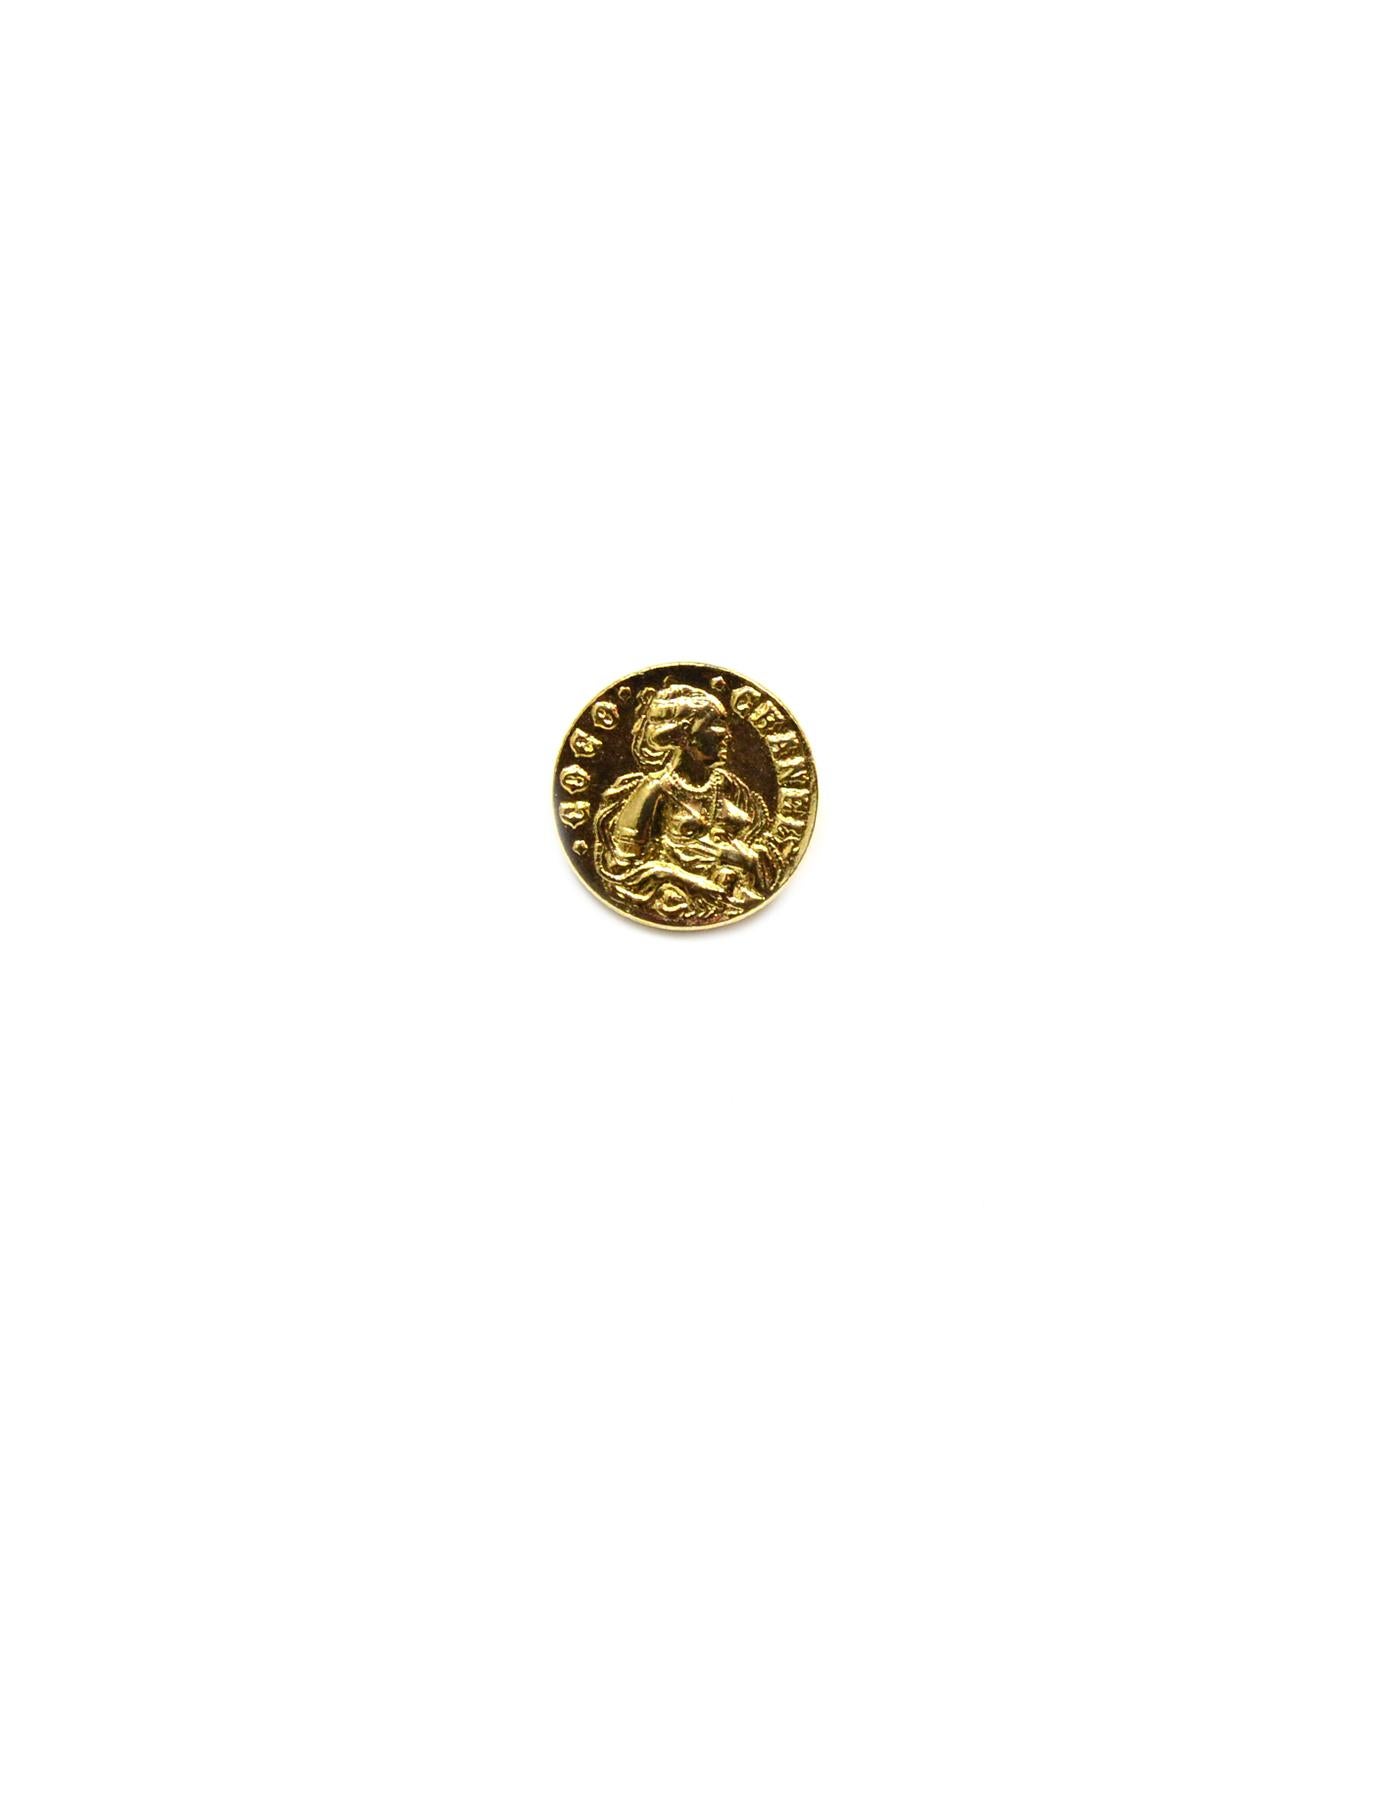 Chanel COCO Goldtone Medium Shank Buttons (Set of 9)

Color: Goldtone
Materials:  Goldtone metal
Hallmarks:   On back of each button- 